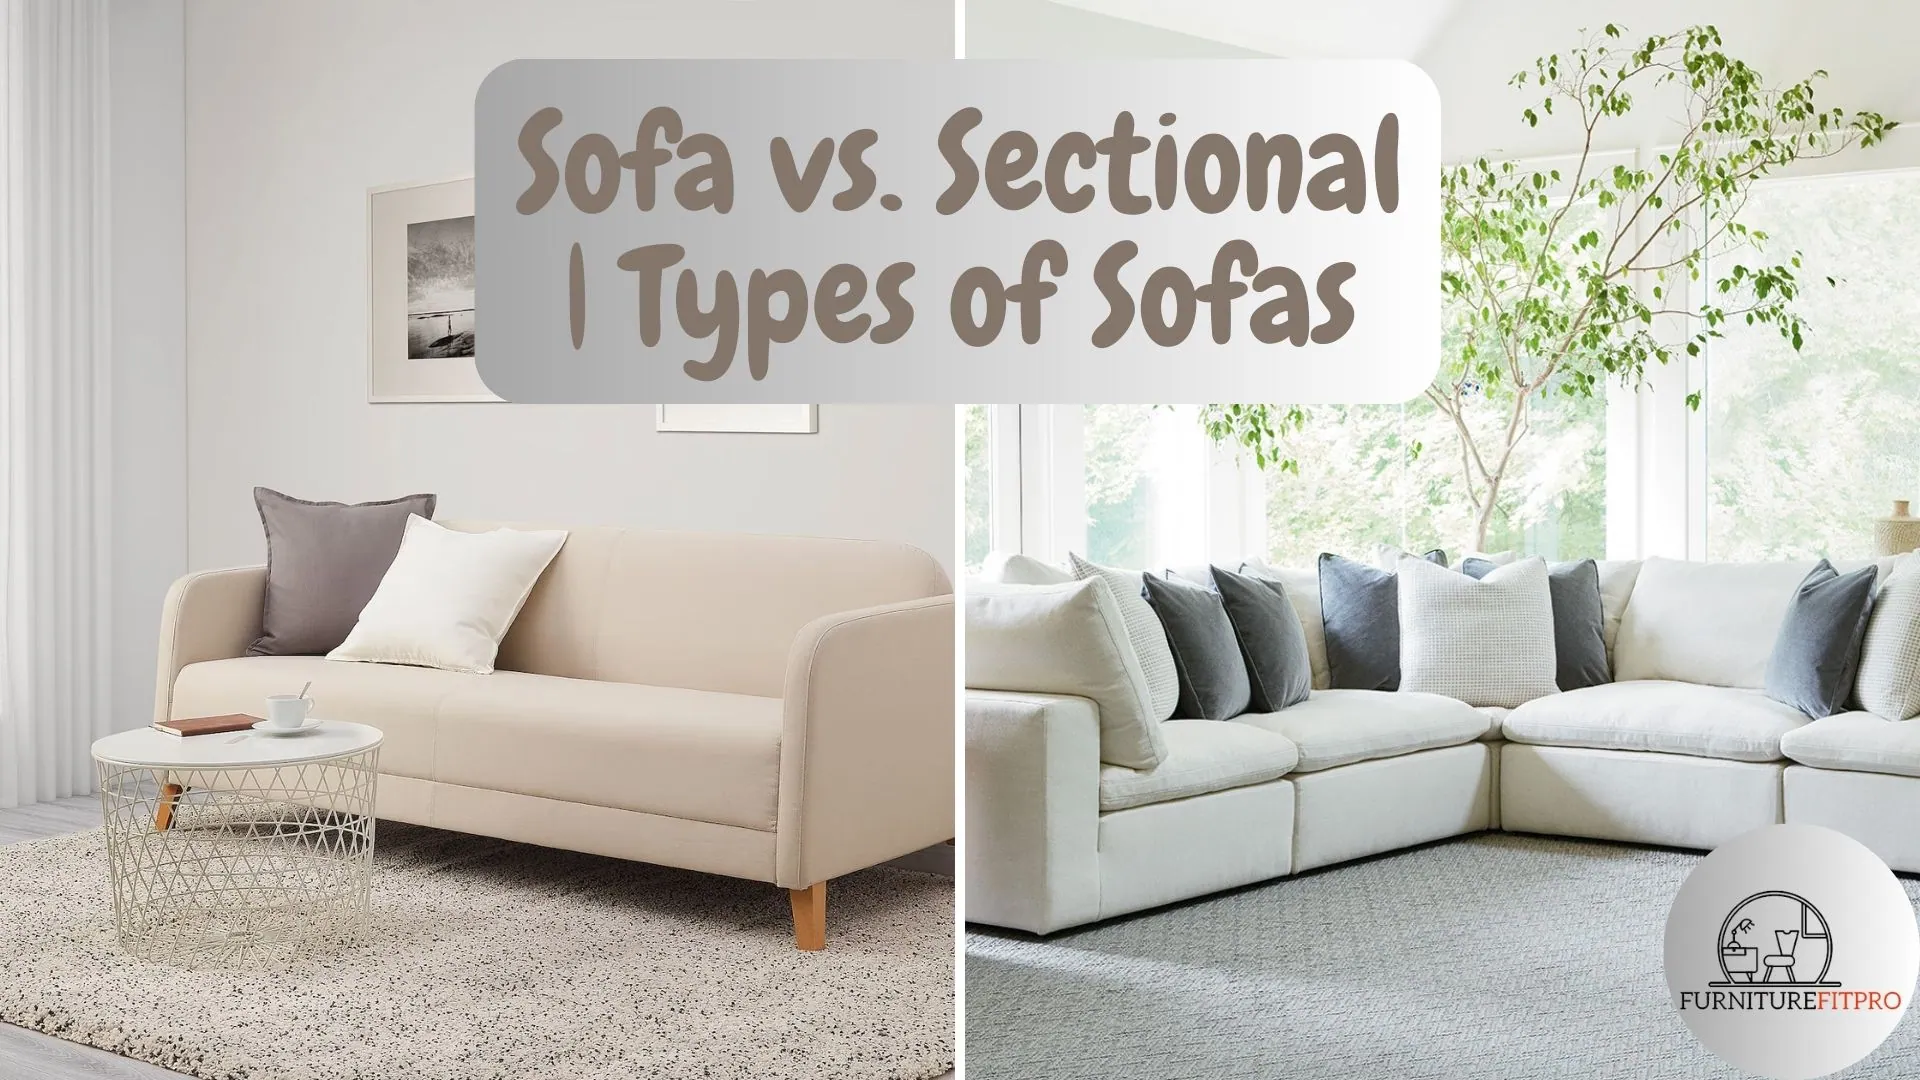 Sofa vs. Sectional